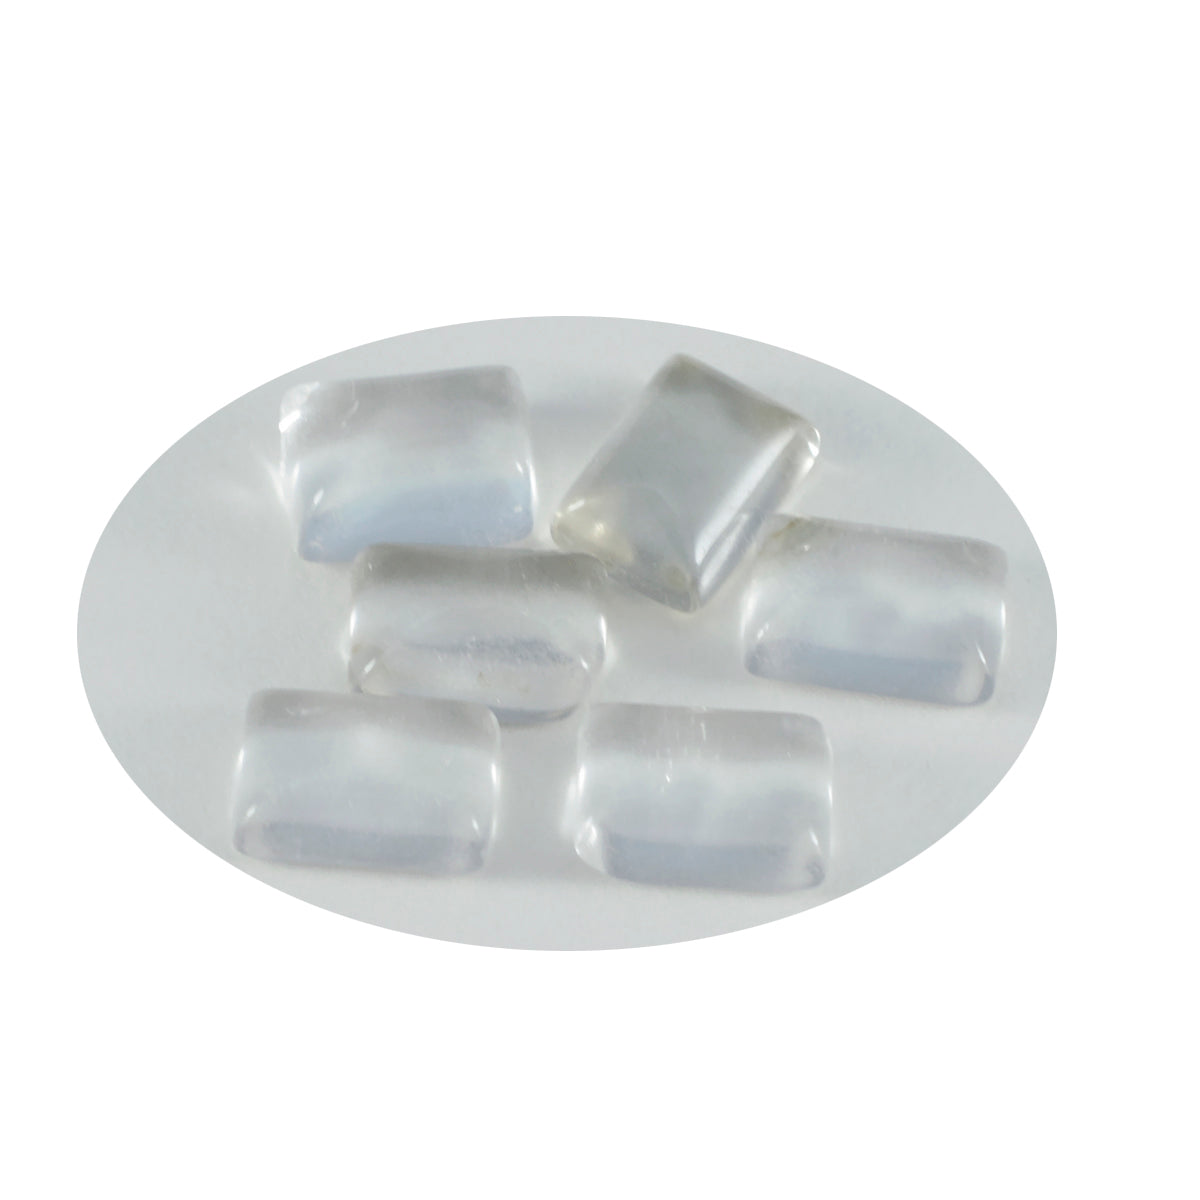 Riyogems 1PC White Crystal Quartz Cabochon 8x10 mm Octagon Shape handsome Quality Loose Gem